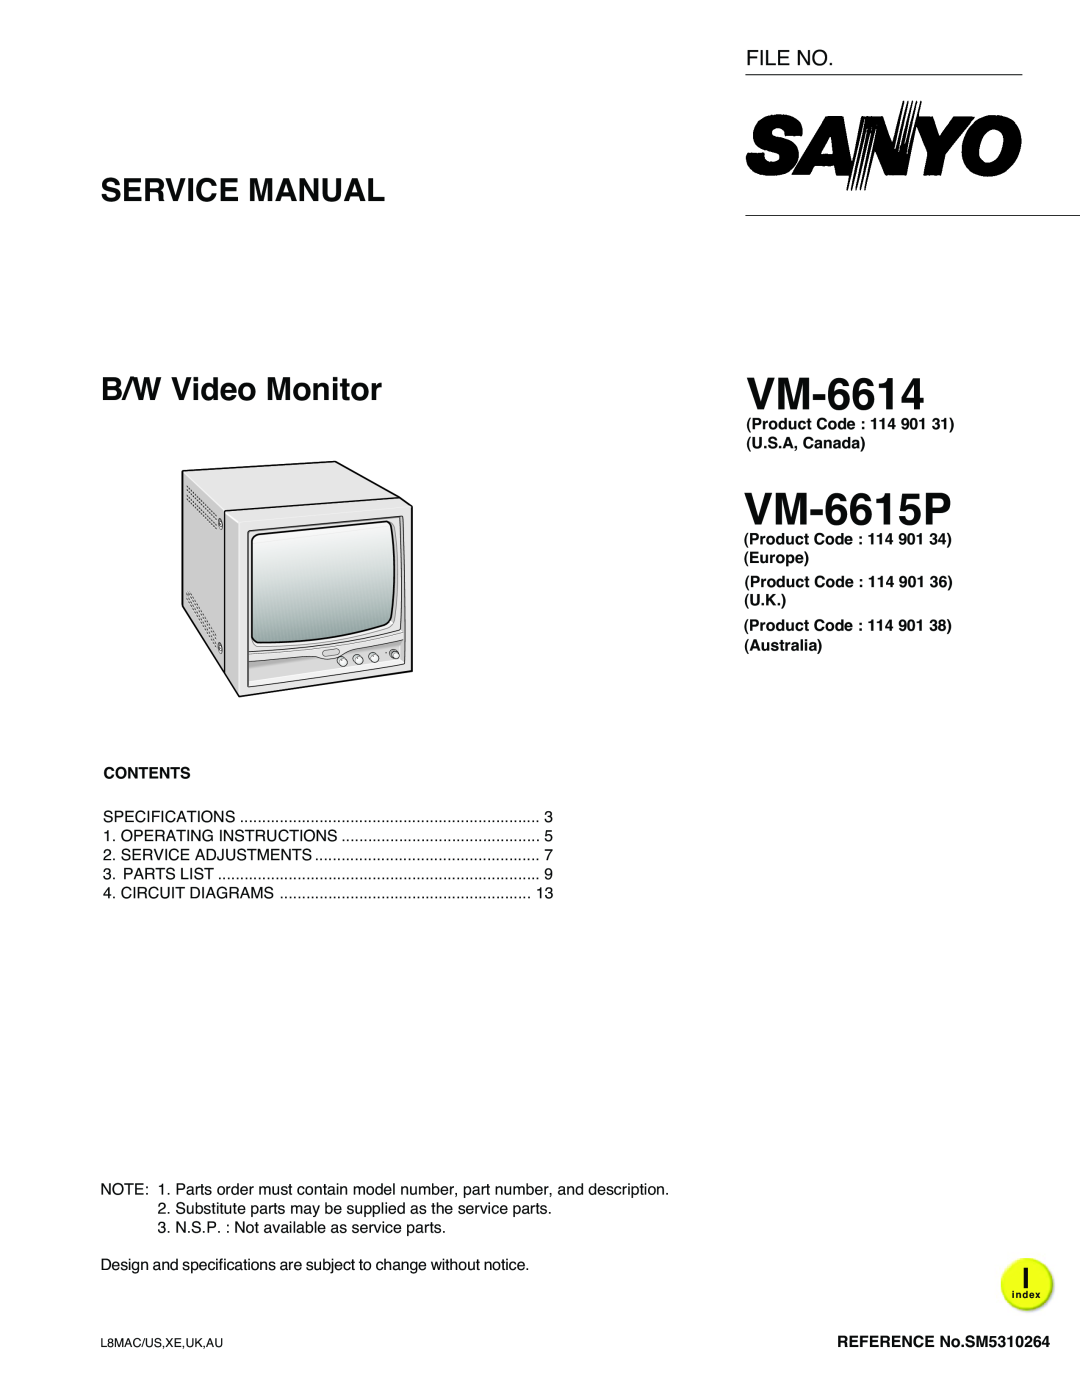 Sanyo VM-6615P VM-6614, SERVICE MANUAL B/W Video Monitor, File No, Product Code 114 901 U.S.A, Canada, Contents 